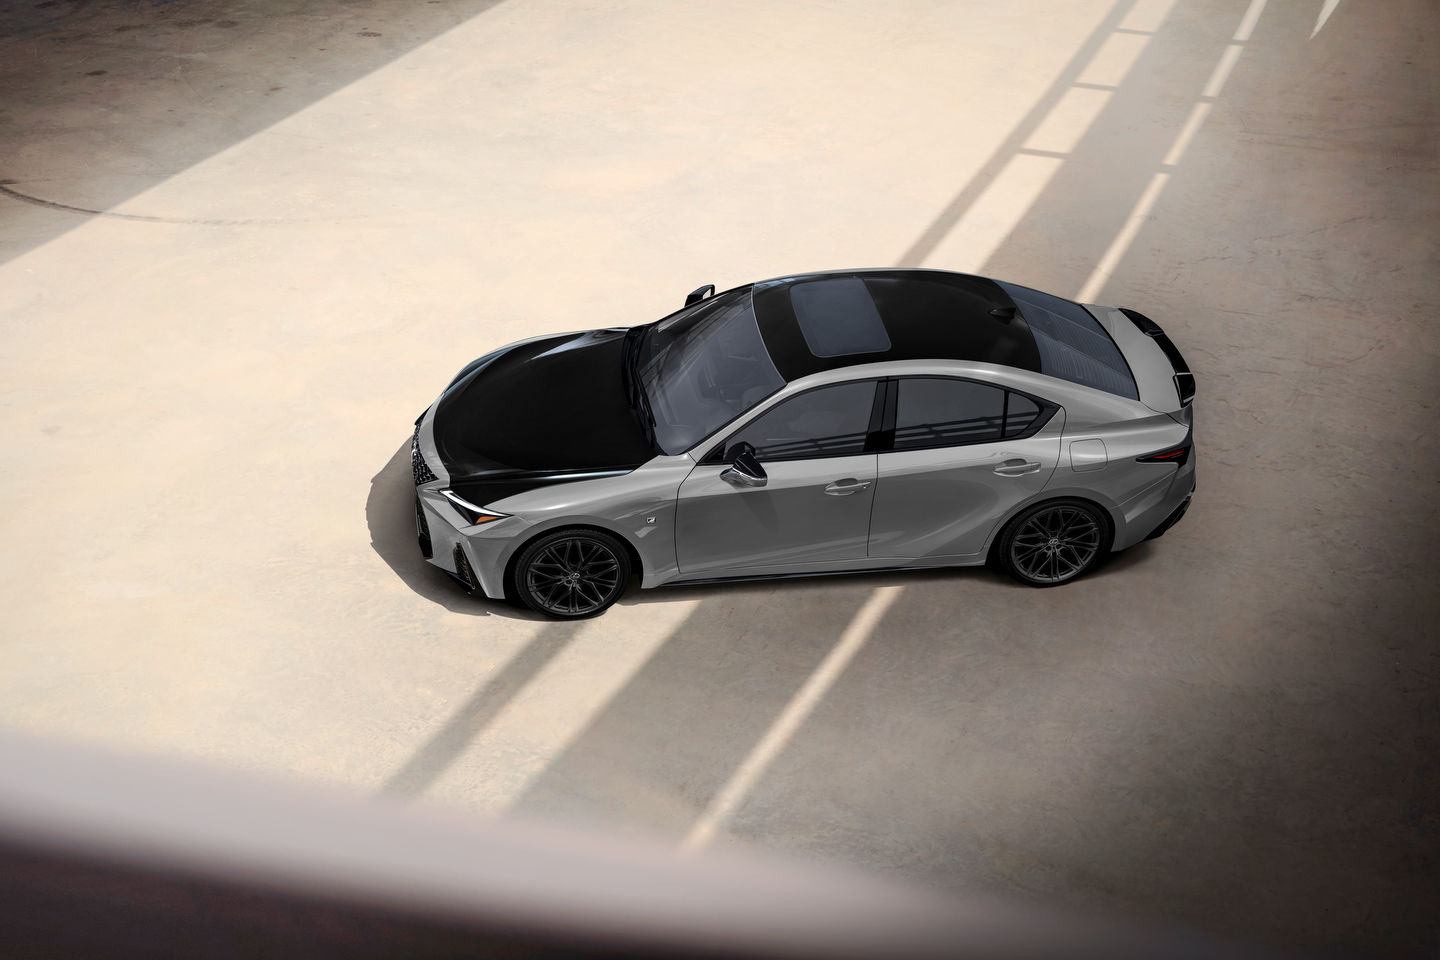 2023 Lexus IS: A Powerful, Agile Luxury Sedan